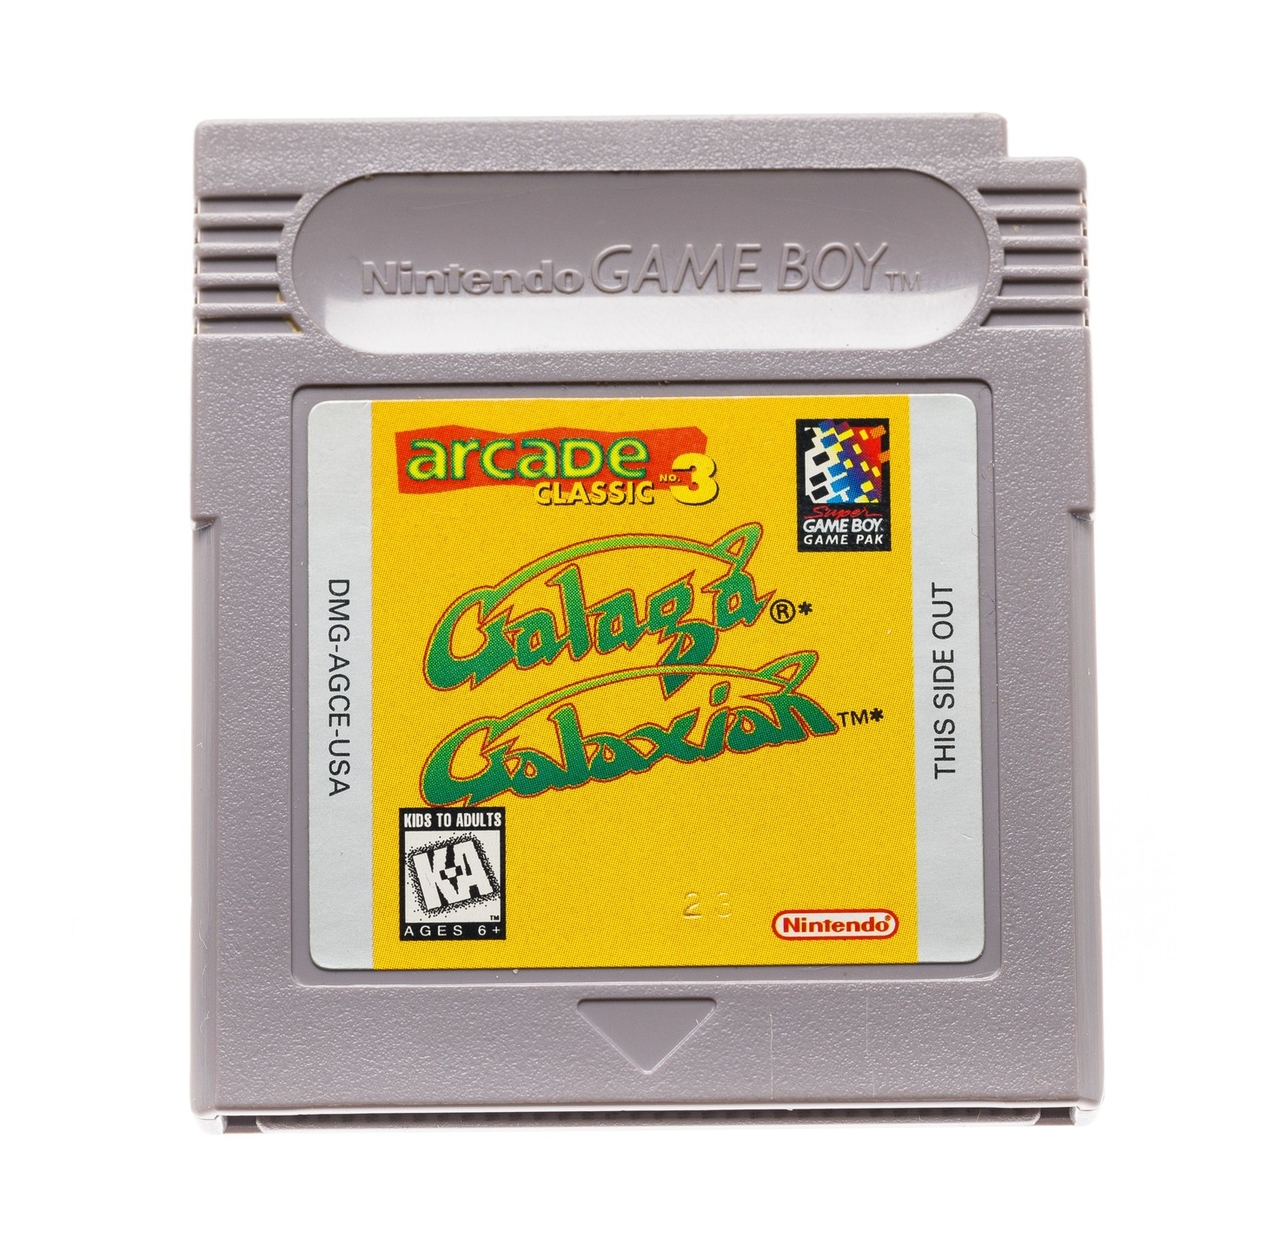 Arcade Classic No. 3: Galaga & Galaxian - Gameboy Classic Games